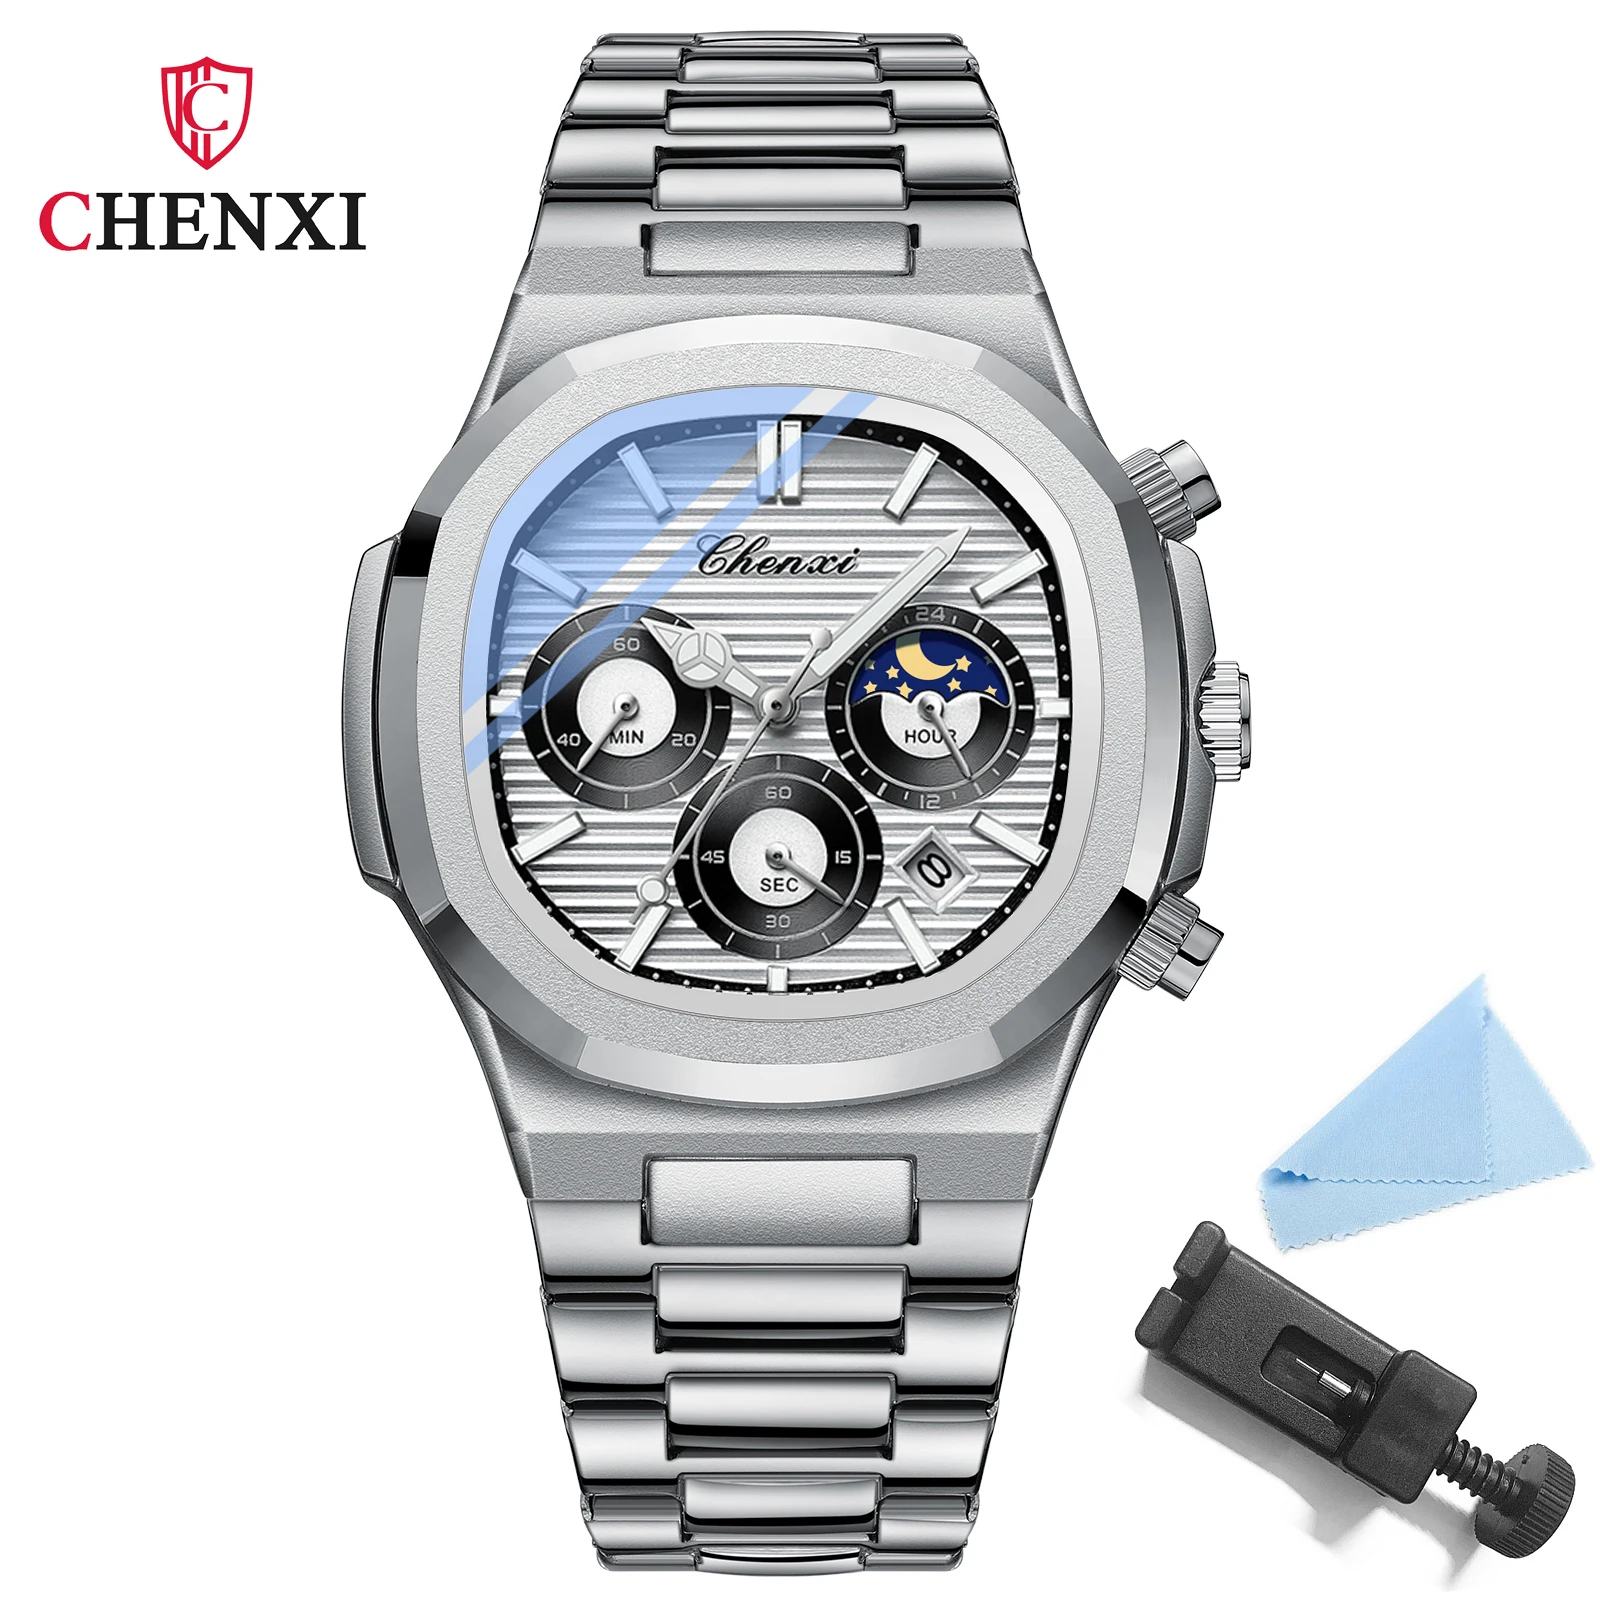 New Luxury Watch Men Business Fashion Waterproof Stainless Steel Chronog... - $35.93